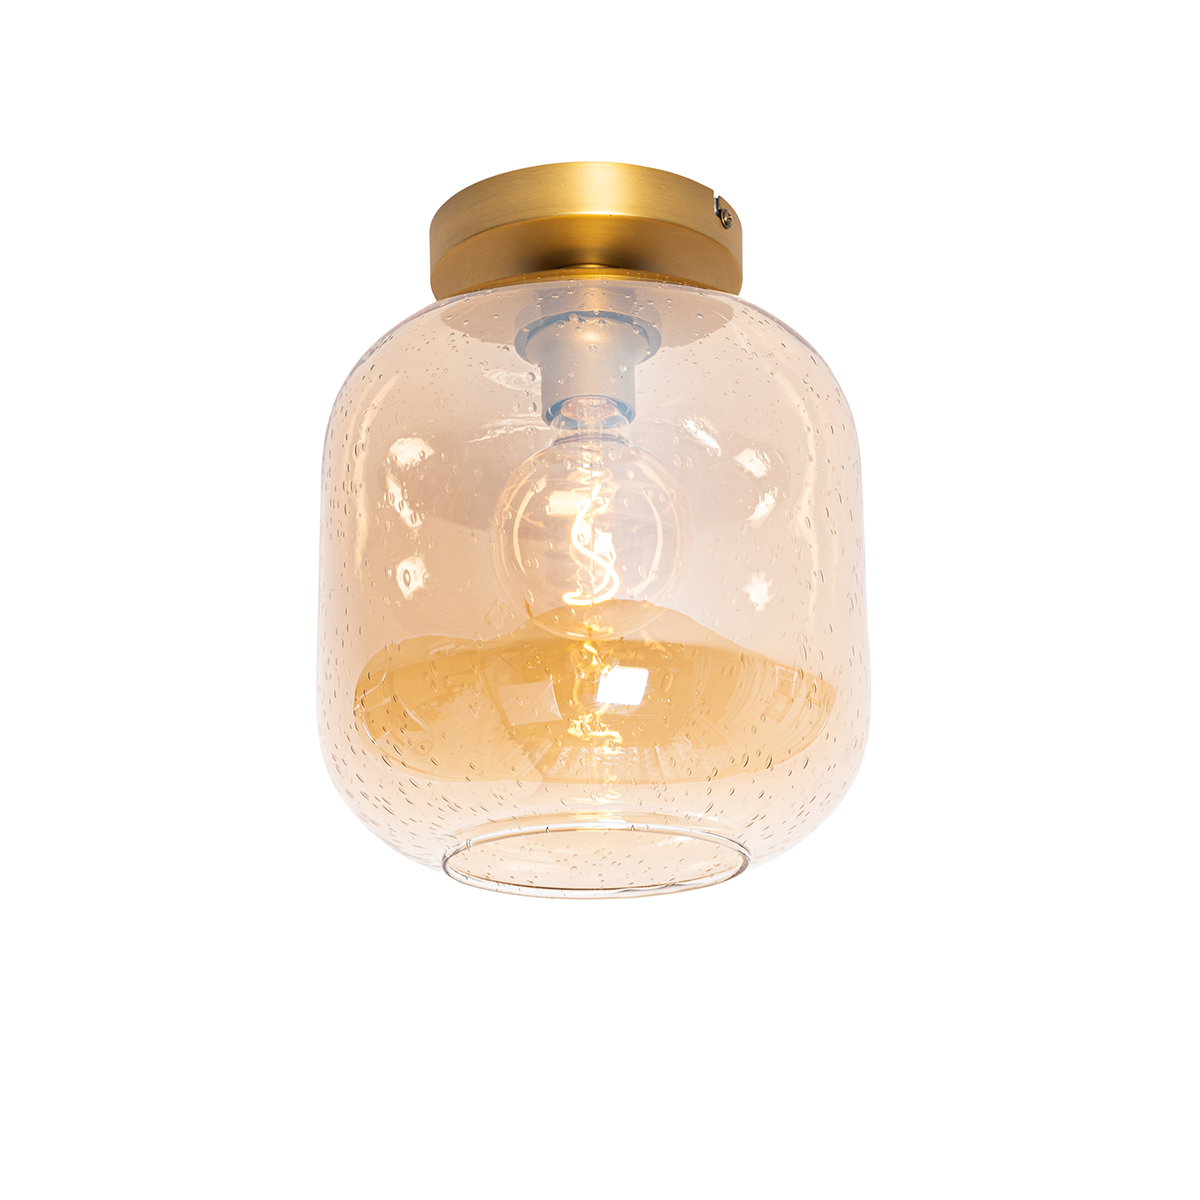 Design ceiling lamp brass and amber glass - Zuzanna